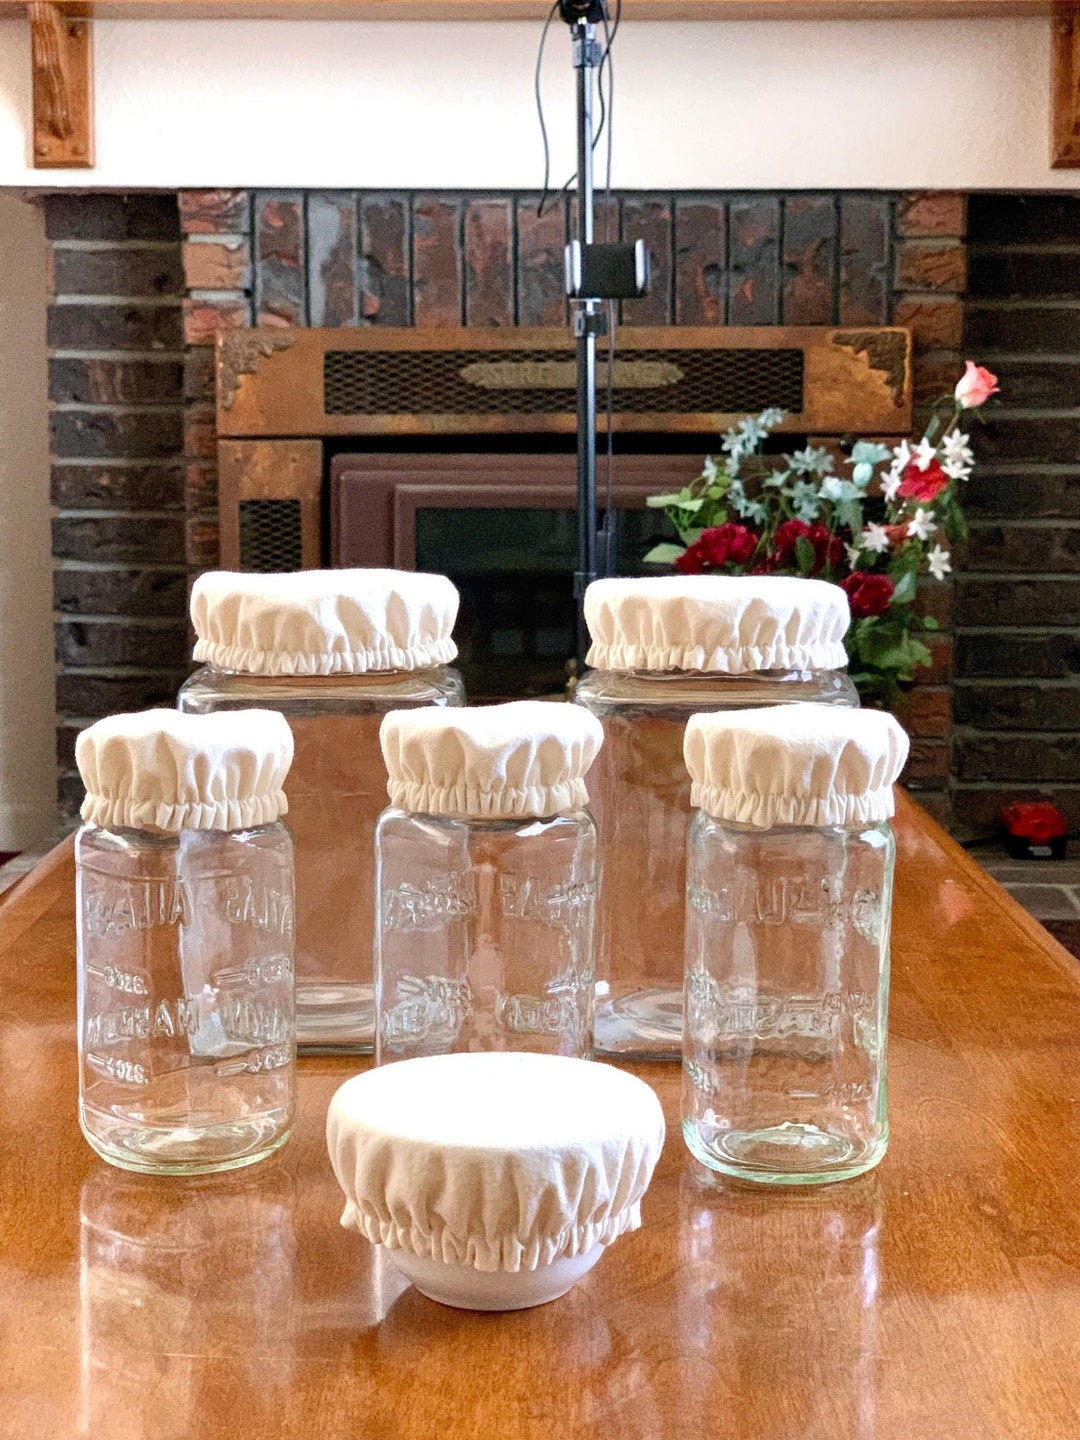 81 Pcs Reusable Mason Jar Bottle Bags,Washable Multi-Size Mason